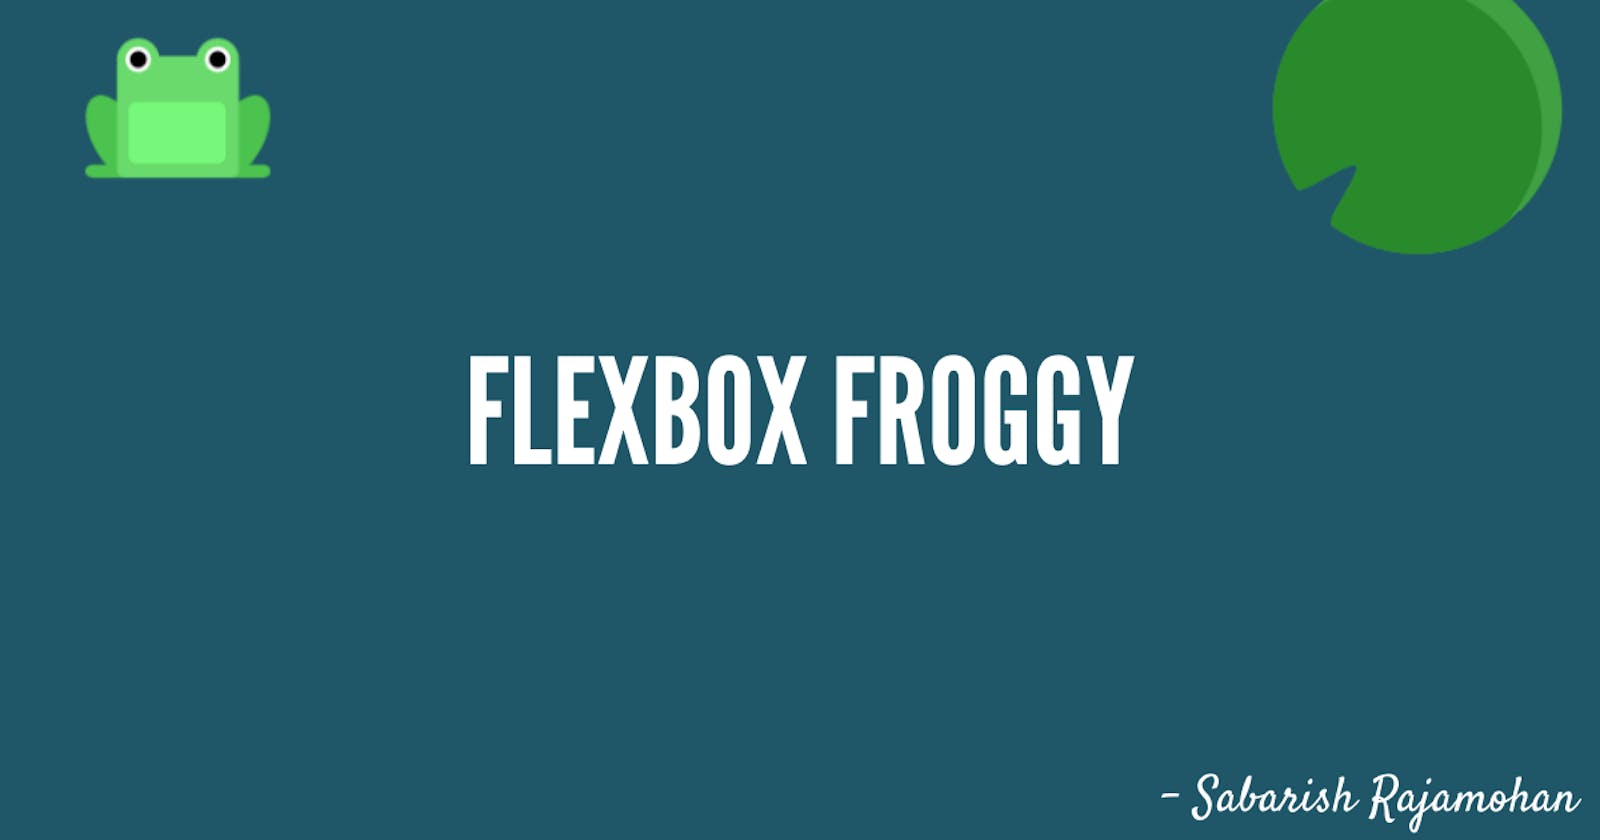 CSS Gamification: Flexbox Froggy